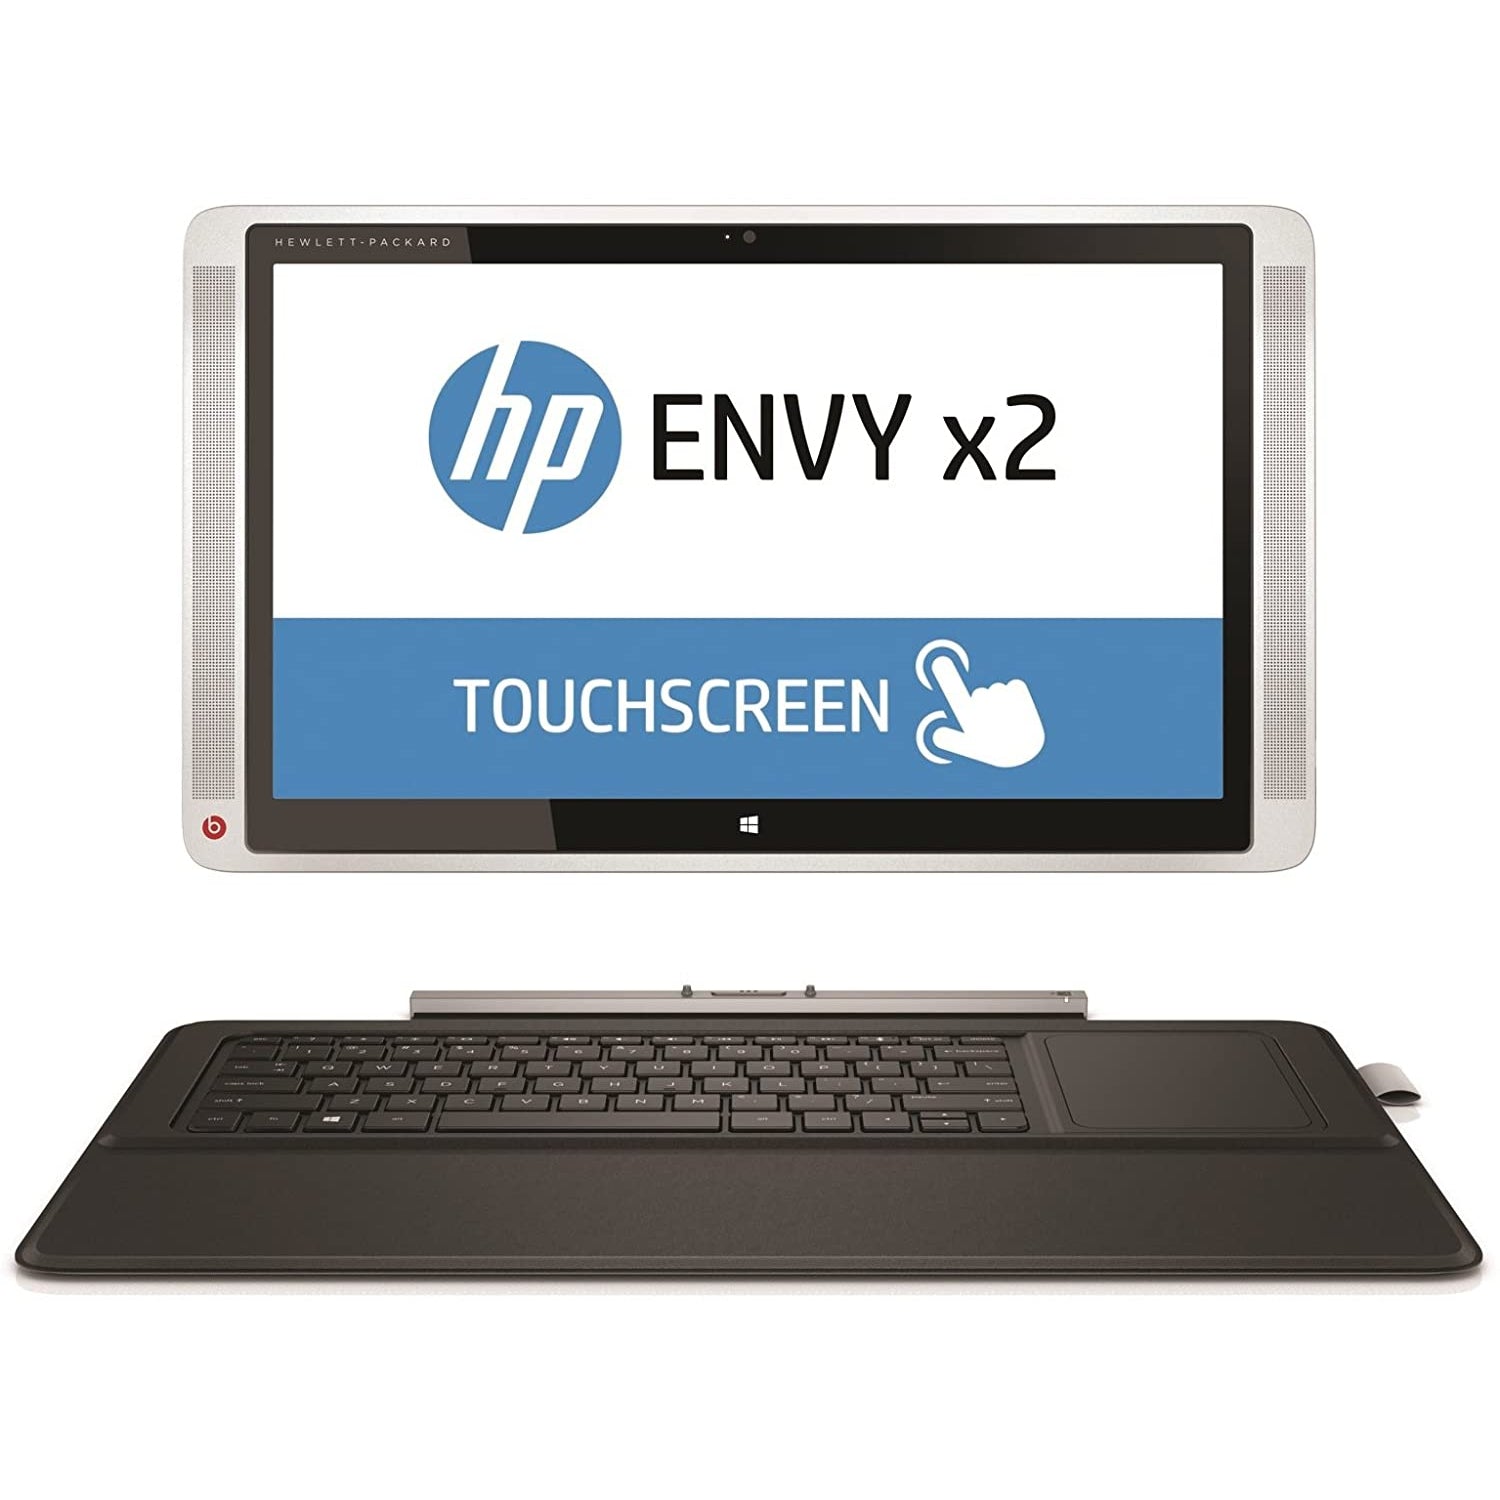 HP ENVY x2 15 Detachable PC (Intel Core M 5Y10 with Intel HD Graphics 5300, 4 GB RAM, 500GB HDD, Windows 10 - Silver